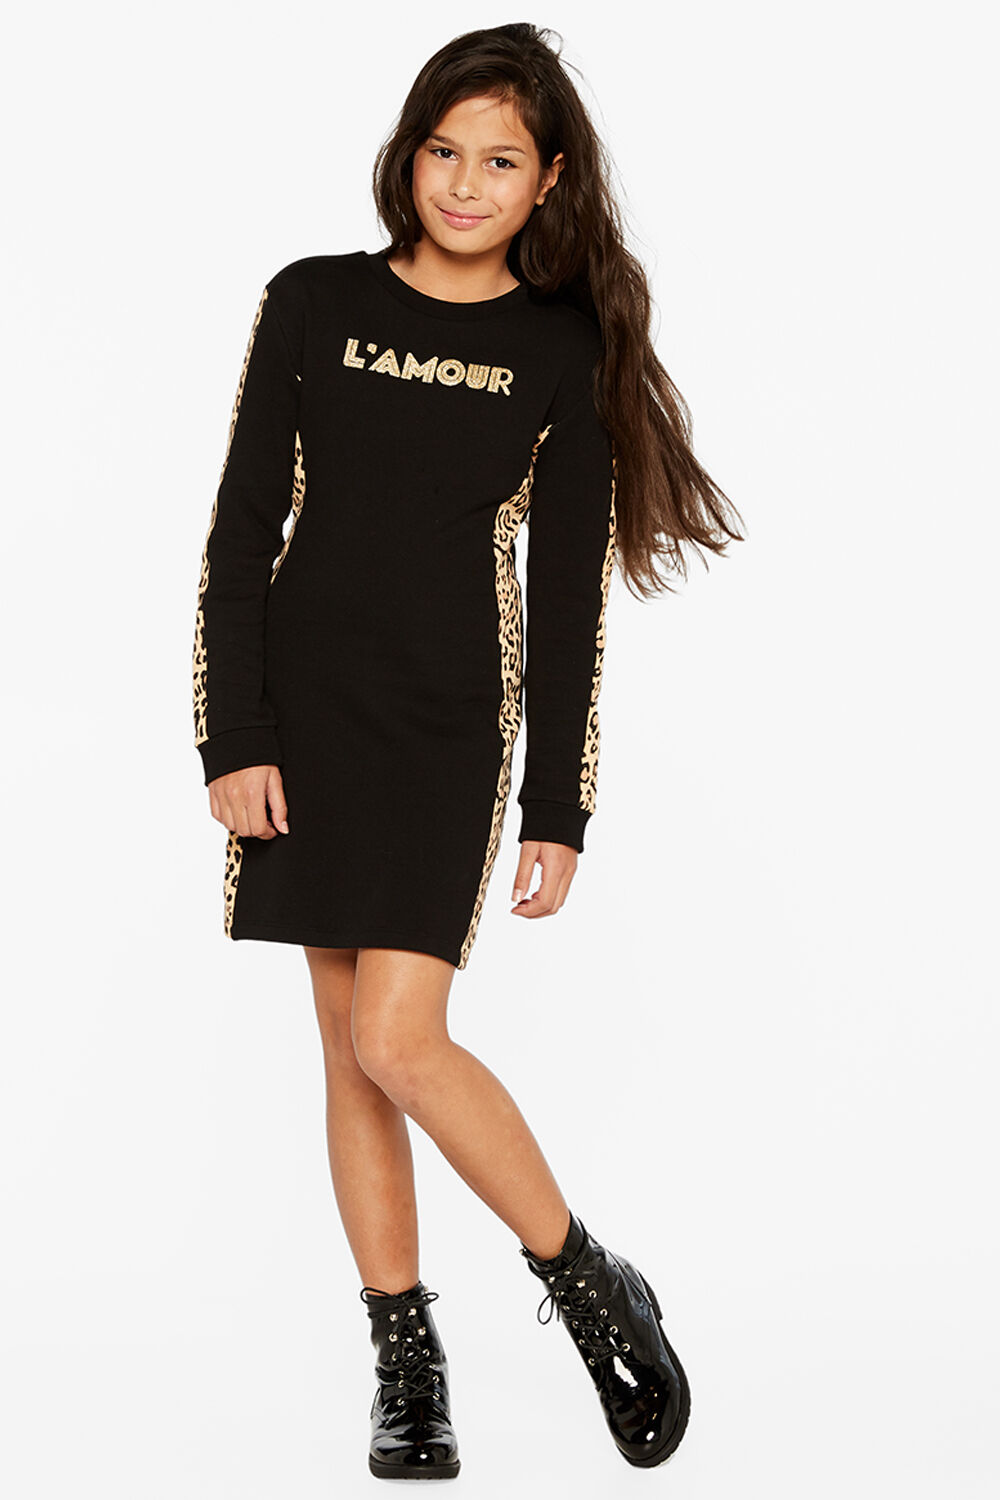 Lamour Sweater Dress | Tween Girls 7-16 Dresses | Bardot Junior